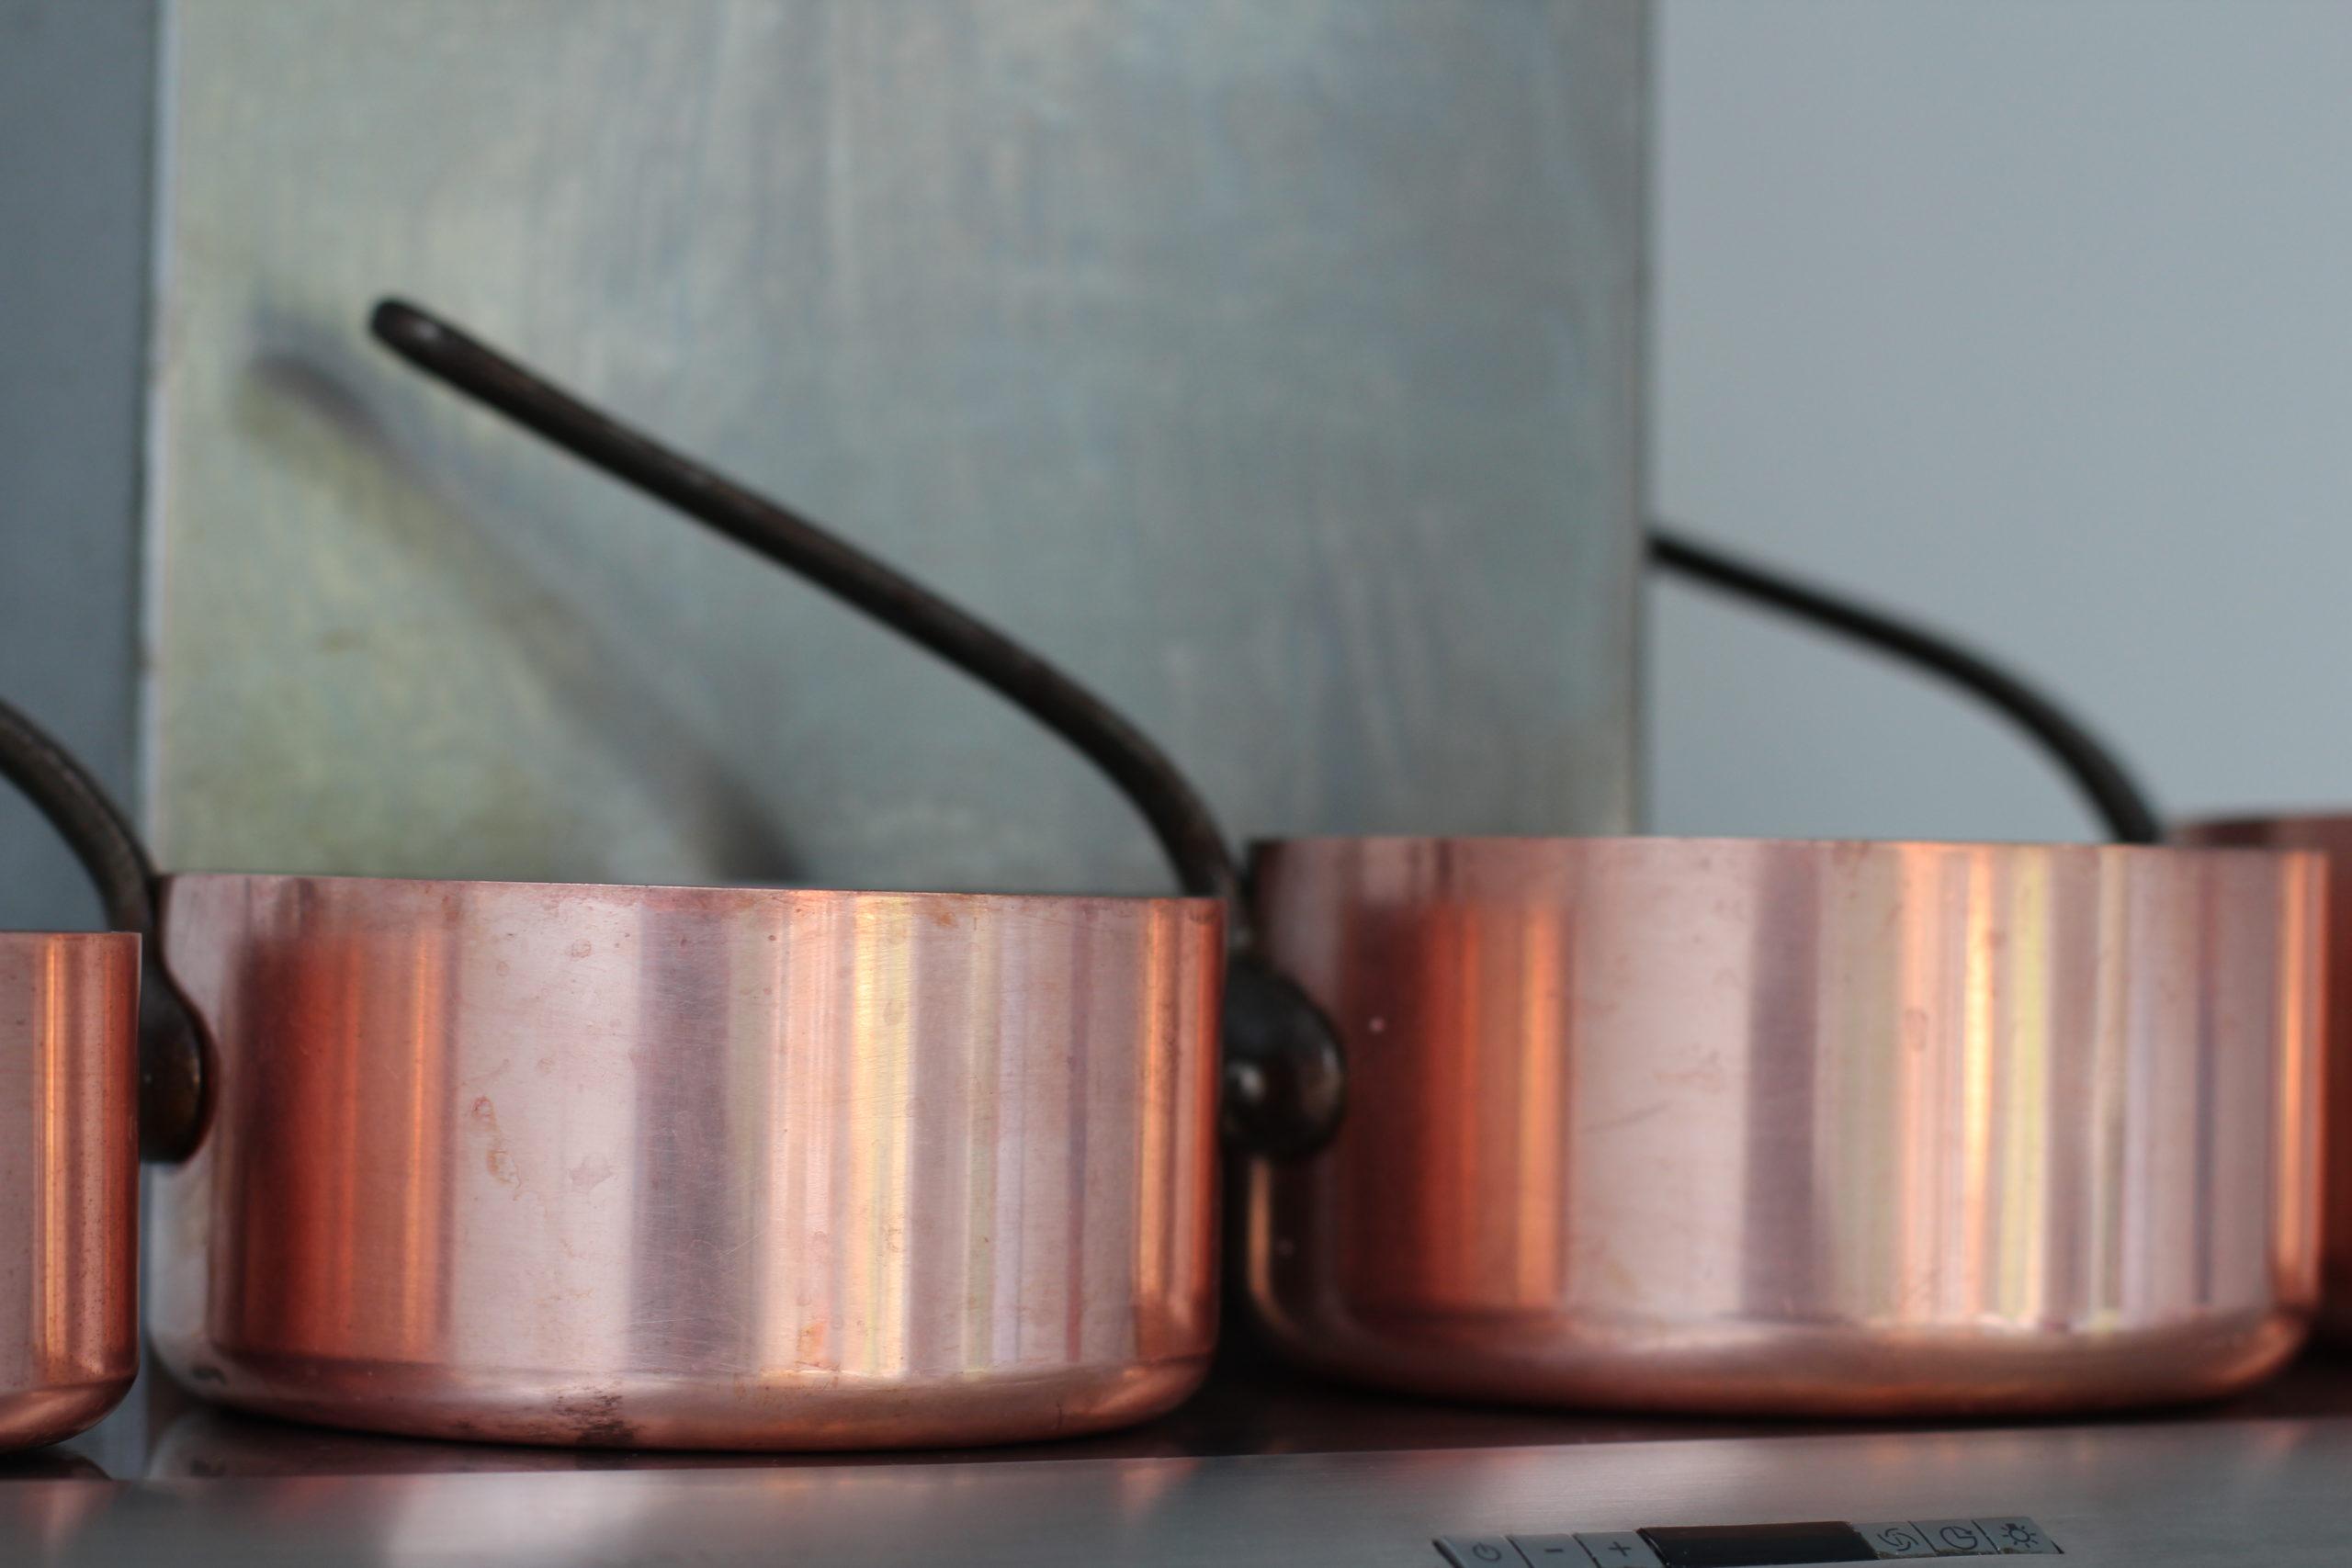 copper pan